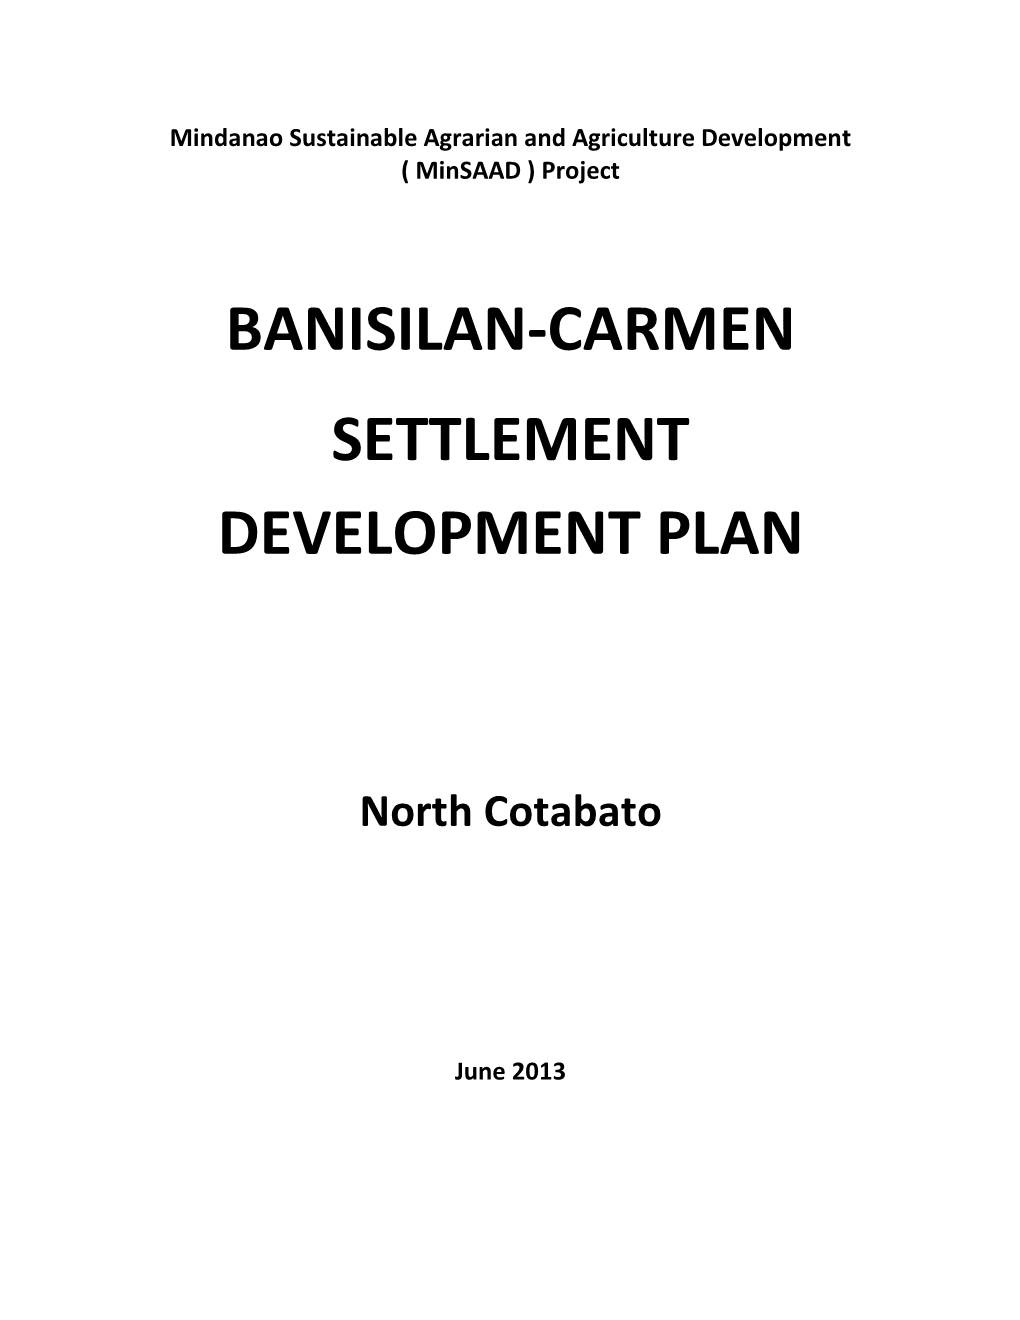 Banisilan-Carmen Settlement Development Plan